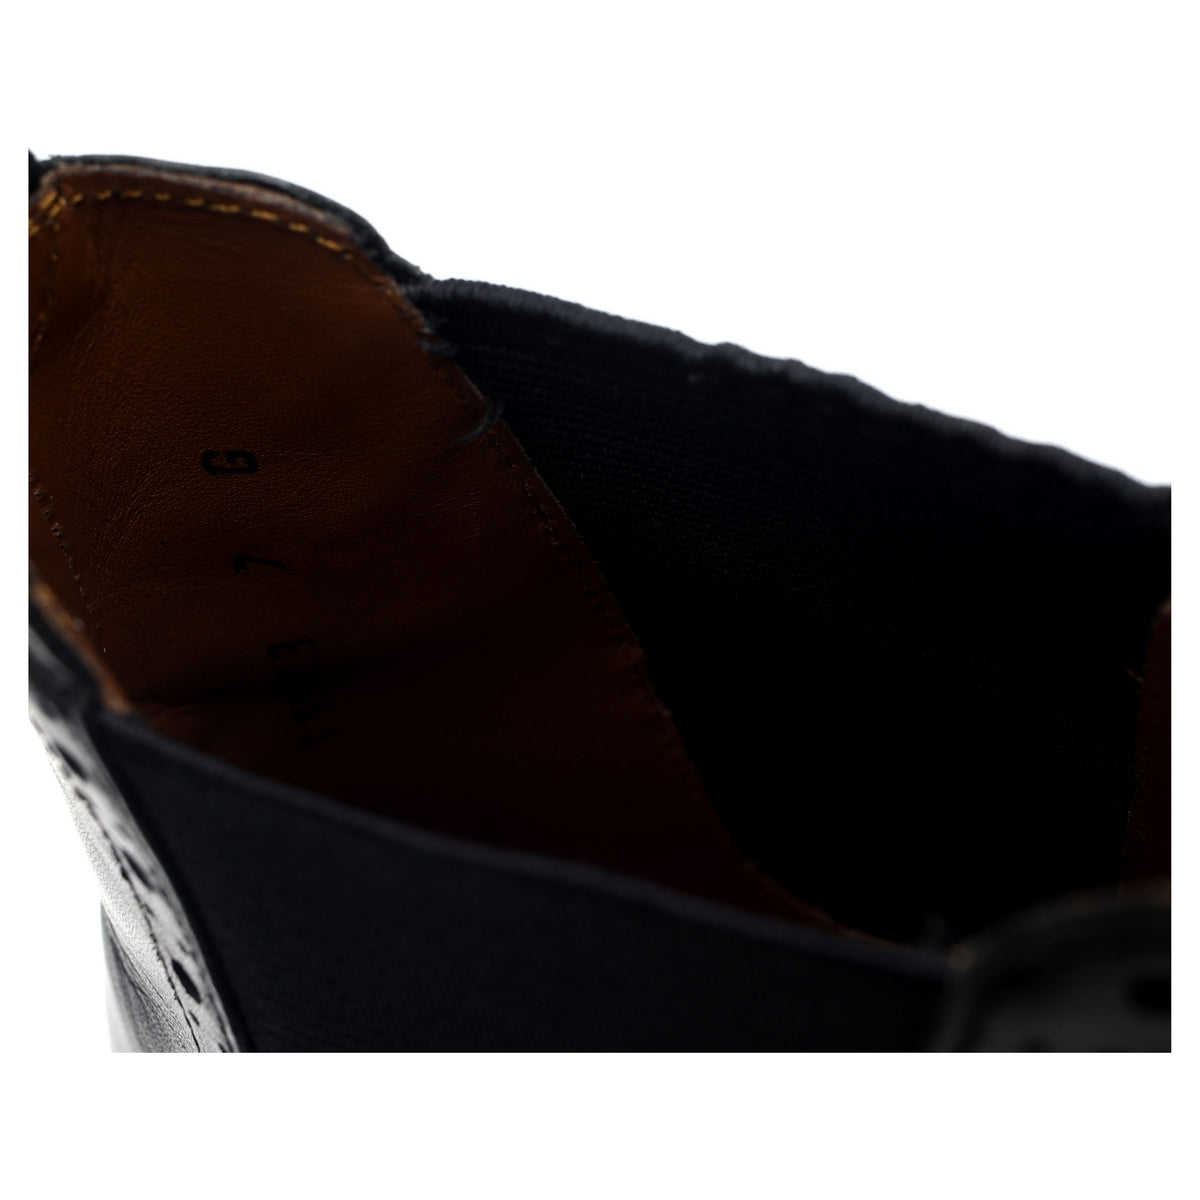 &#39;Jacob&#39; Black Leather Brogue Chelsea Boots UK 7 G